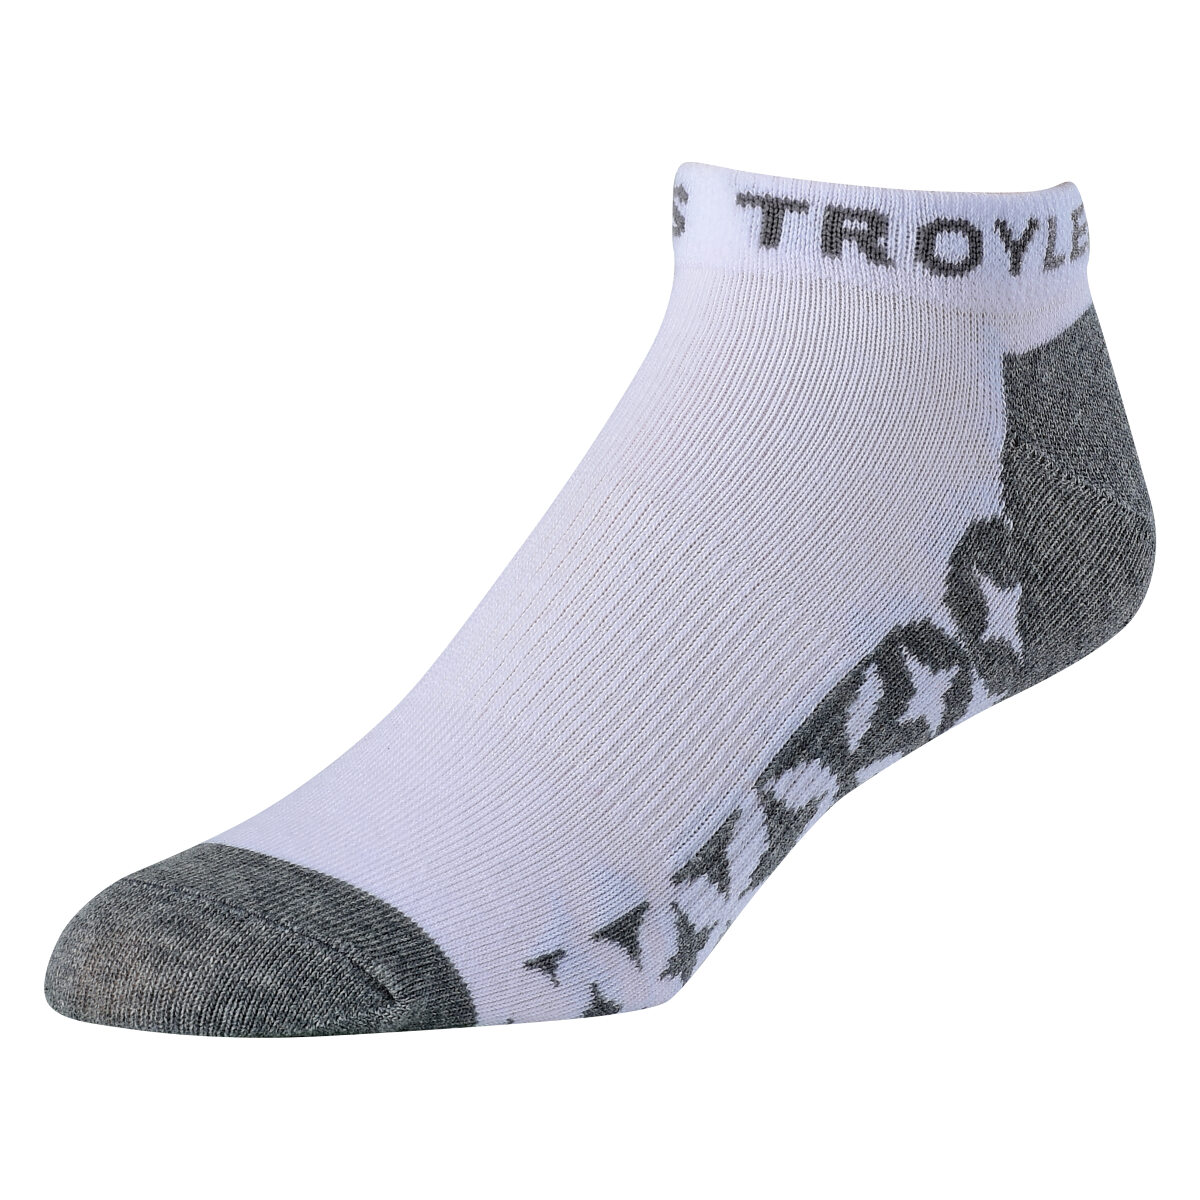 Troy Lee Designs Socks Starburst Ankle White, 3 Pack